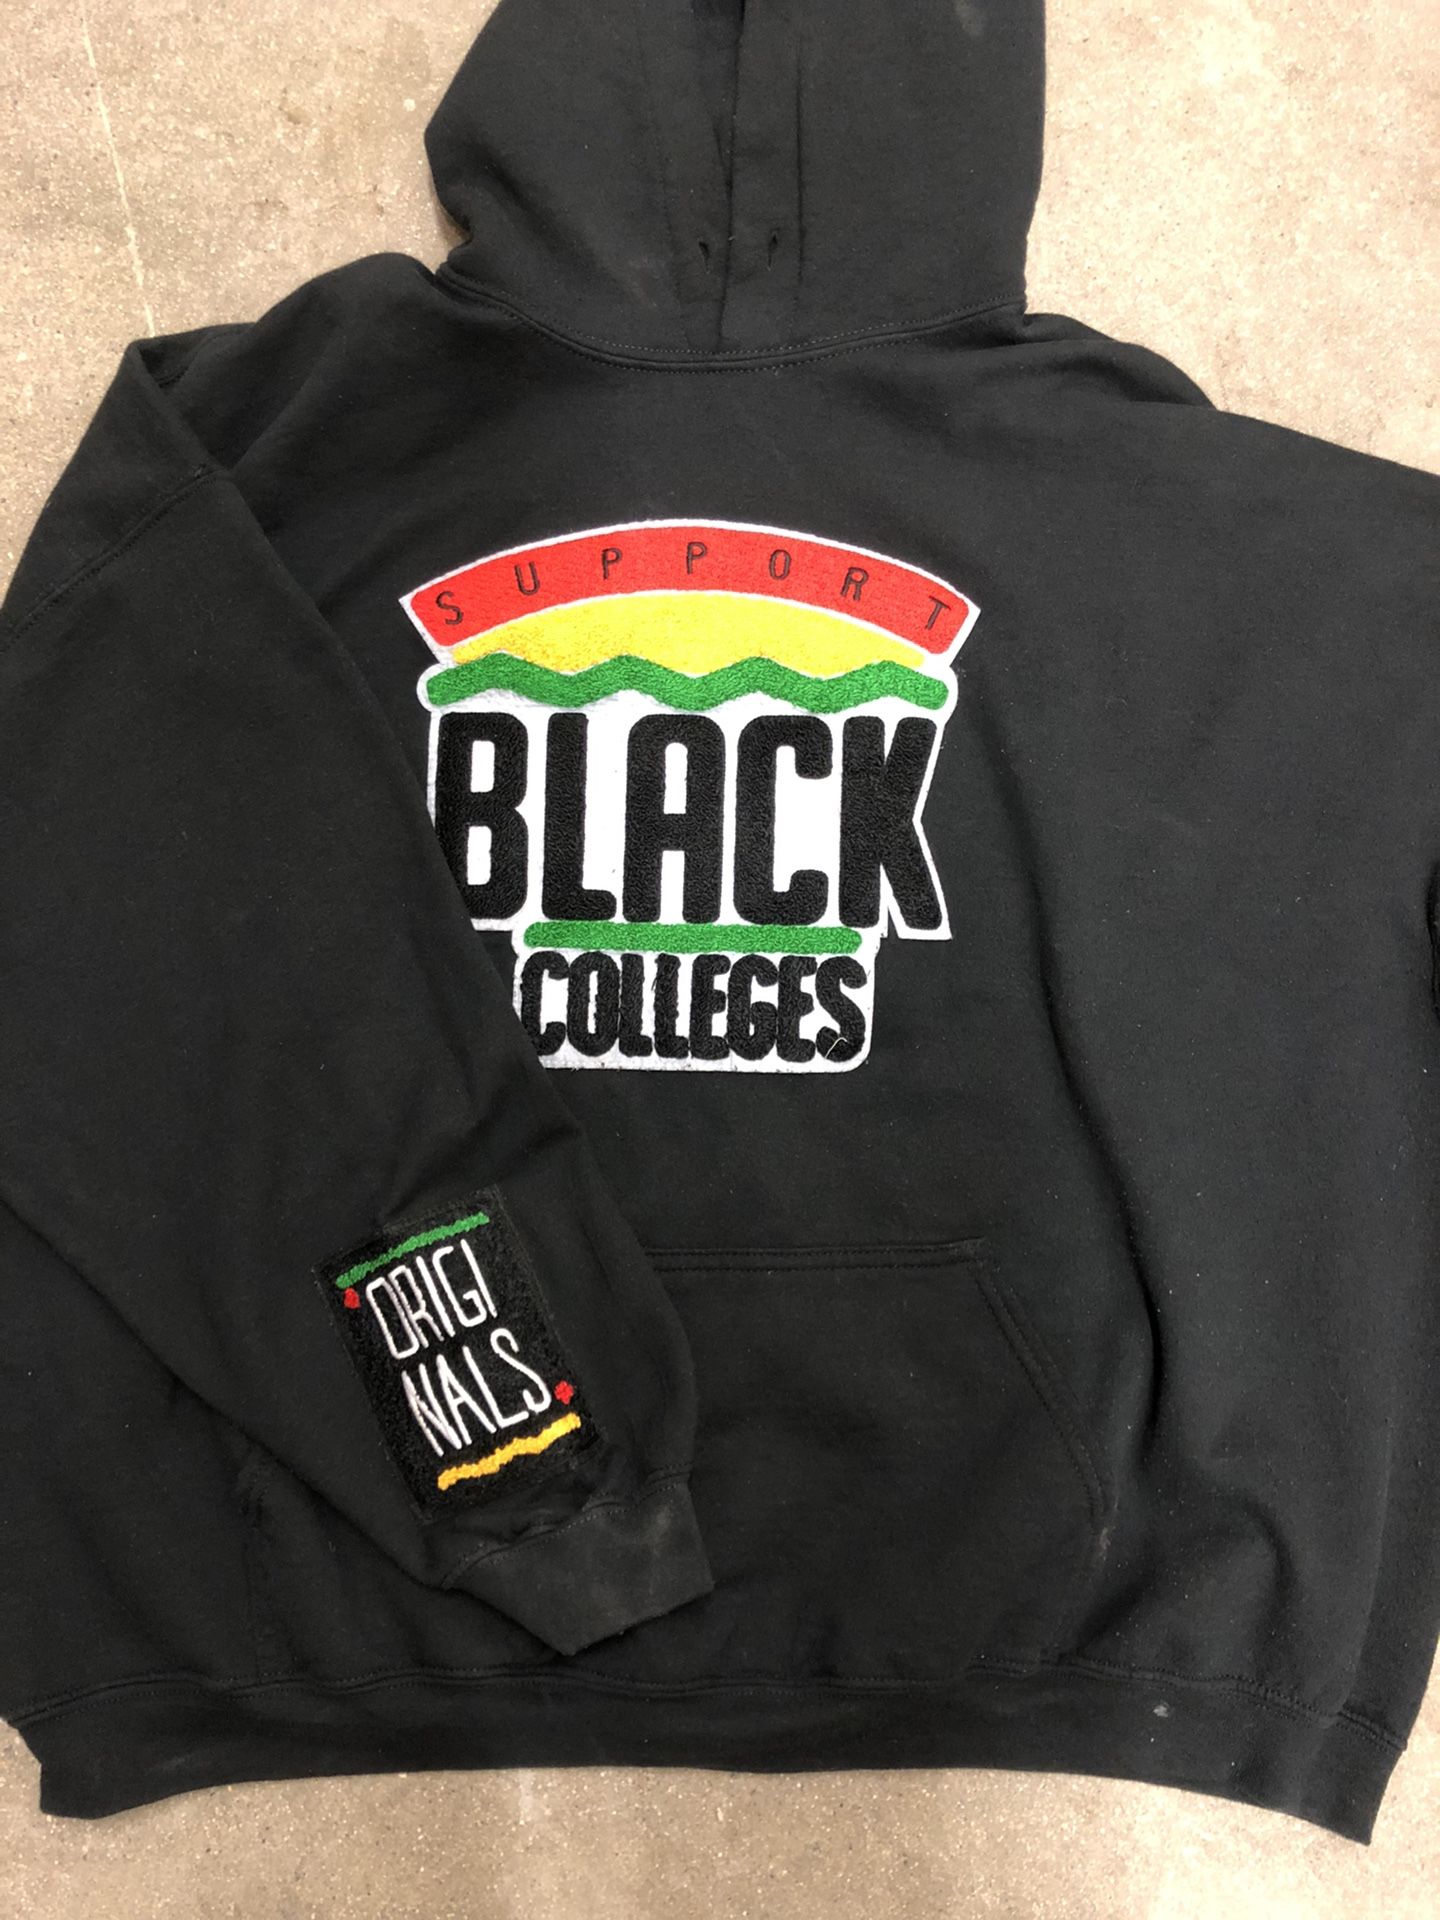 ORIGINALS “Support Black Colleges” Hoodie 